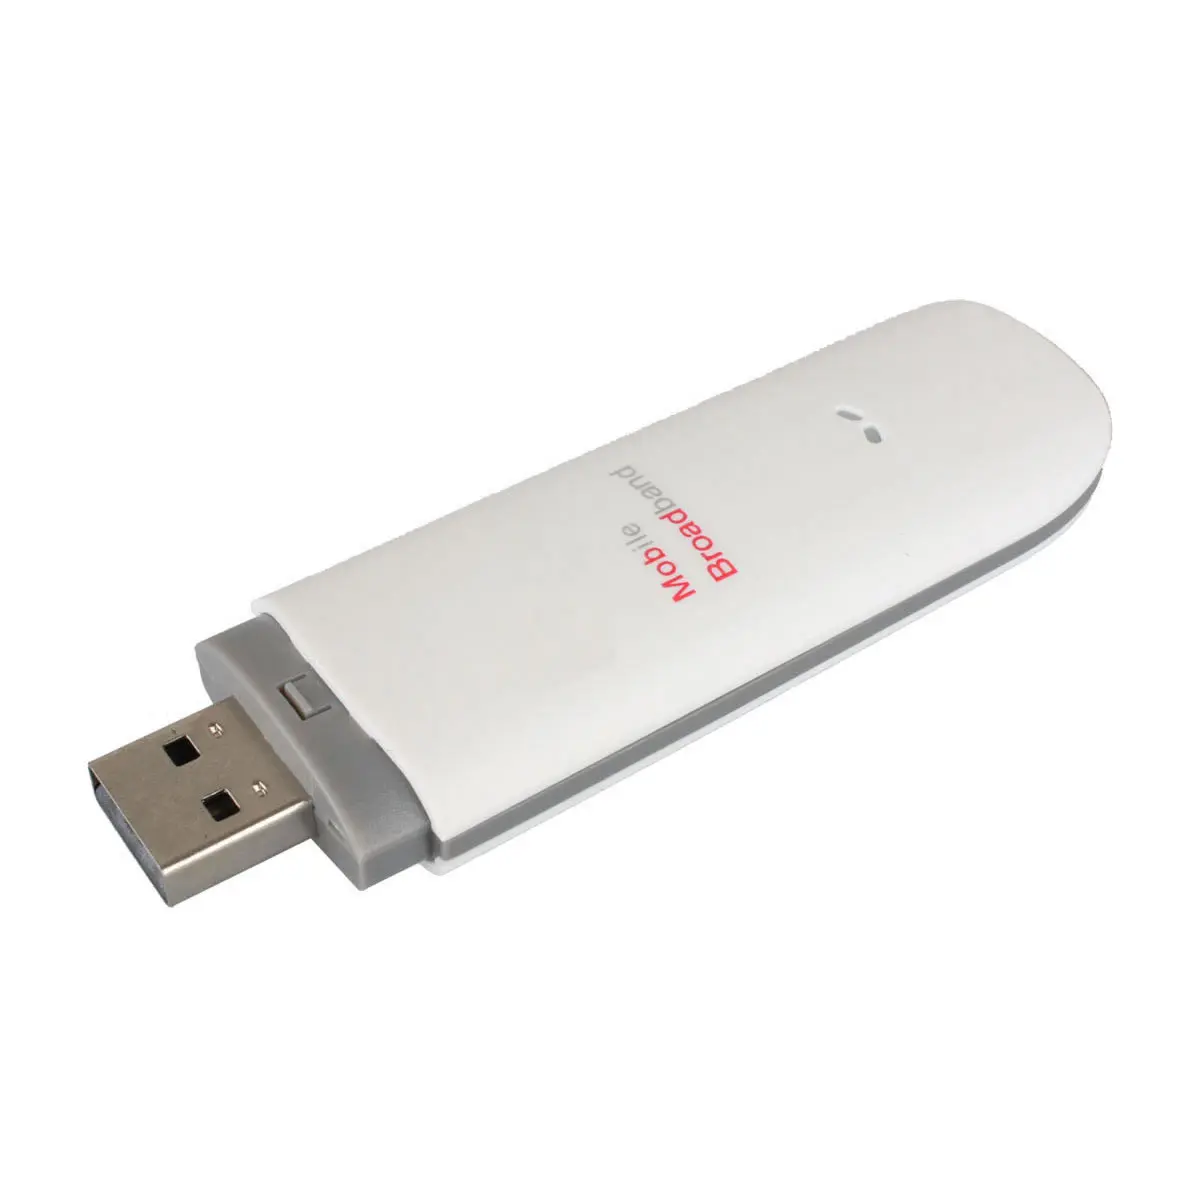 WCDMA 3g беспроводной USB ключ хост UW500 3g модем для автомобиля dvd-плеер поддержка сети 3g